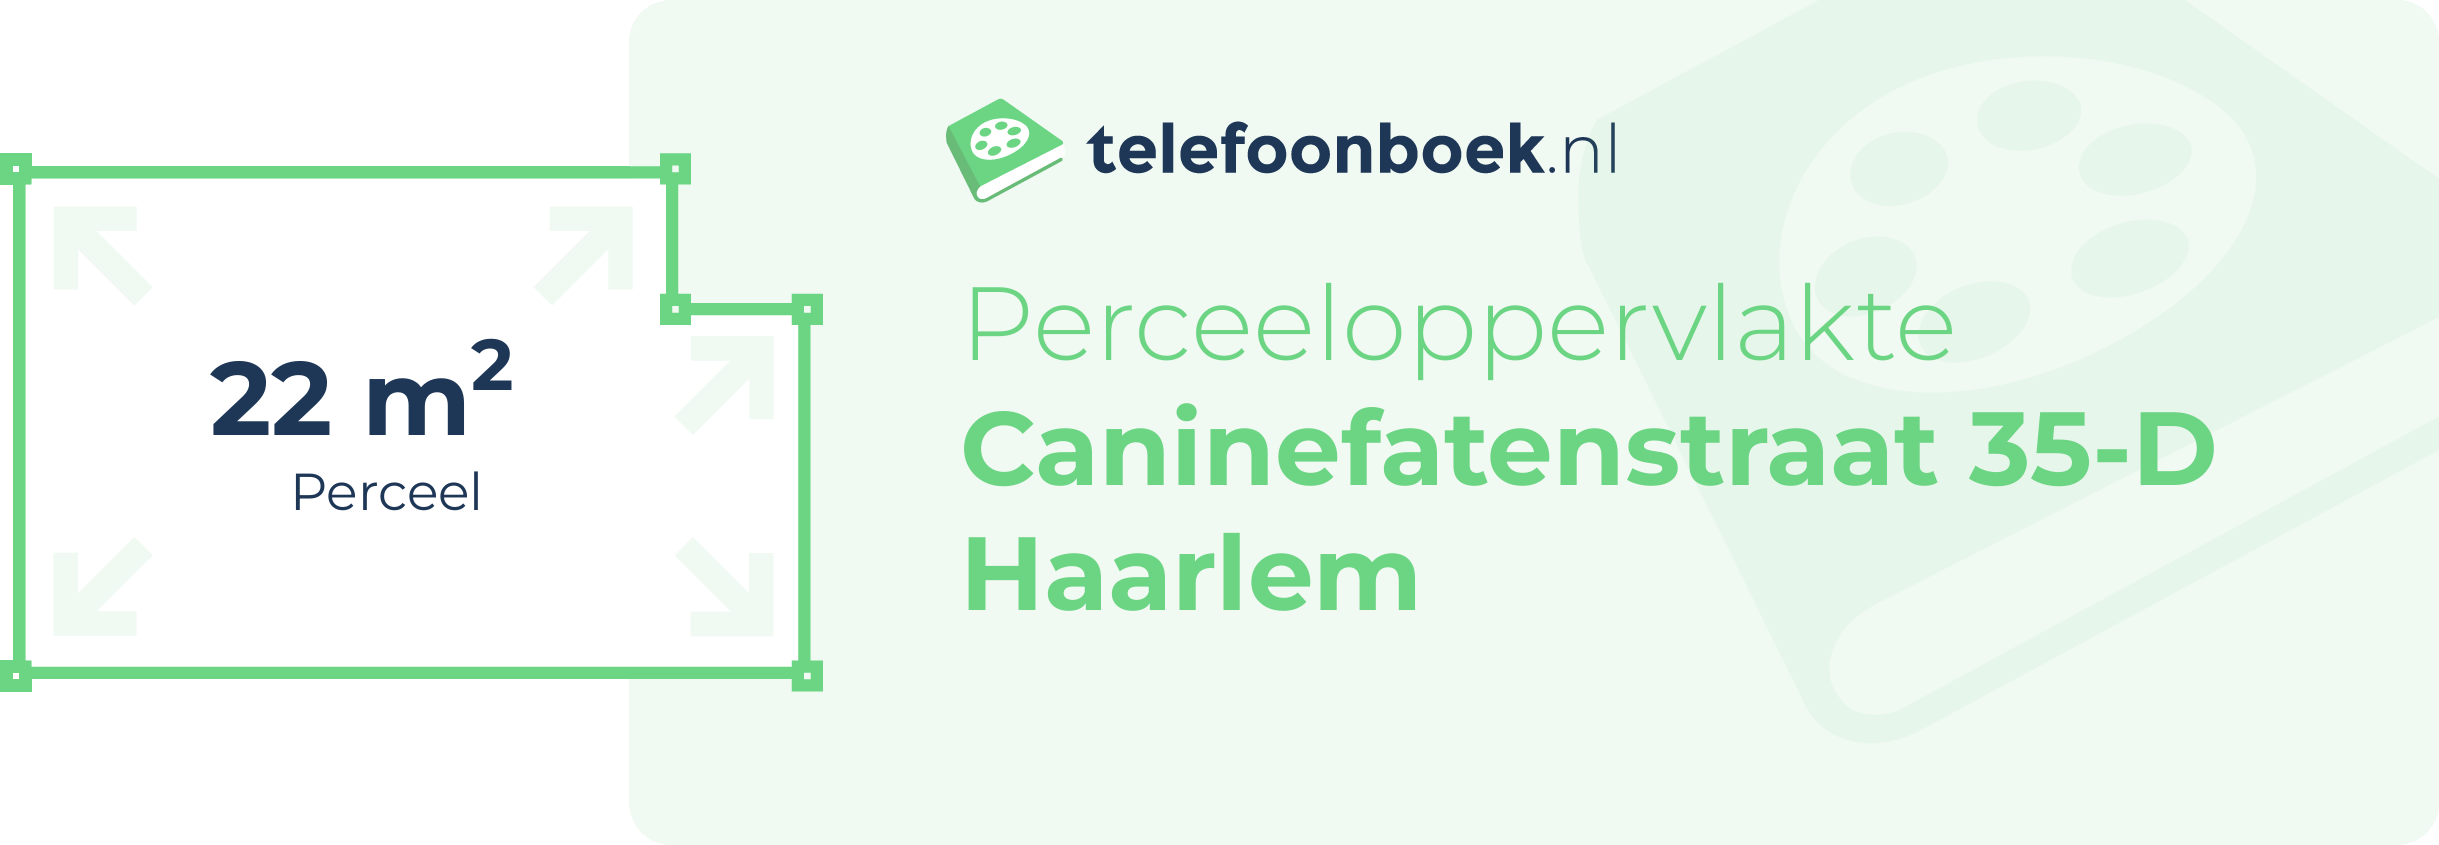 Perceeloppervlakte Caninefatenstraat 35-D Haarlem